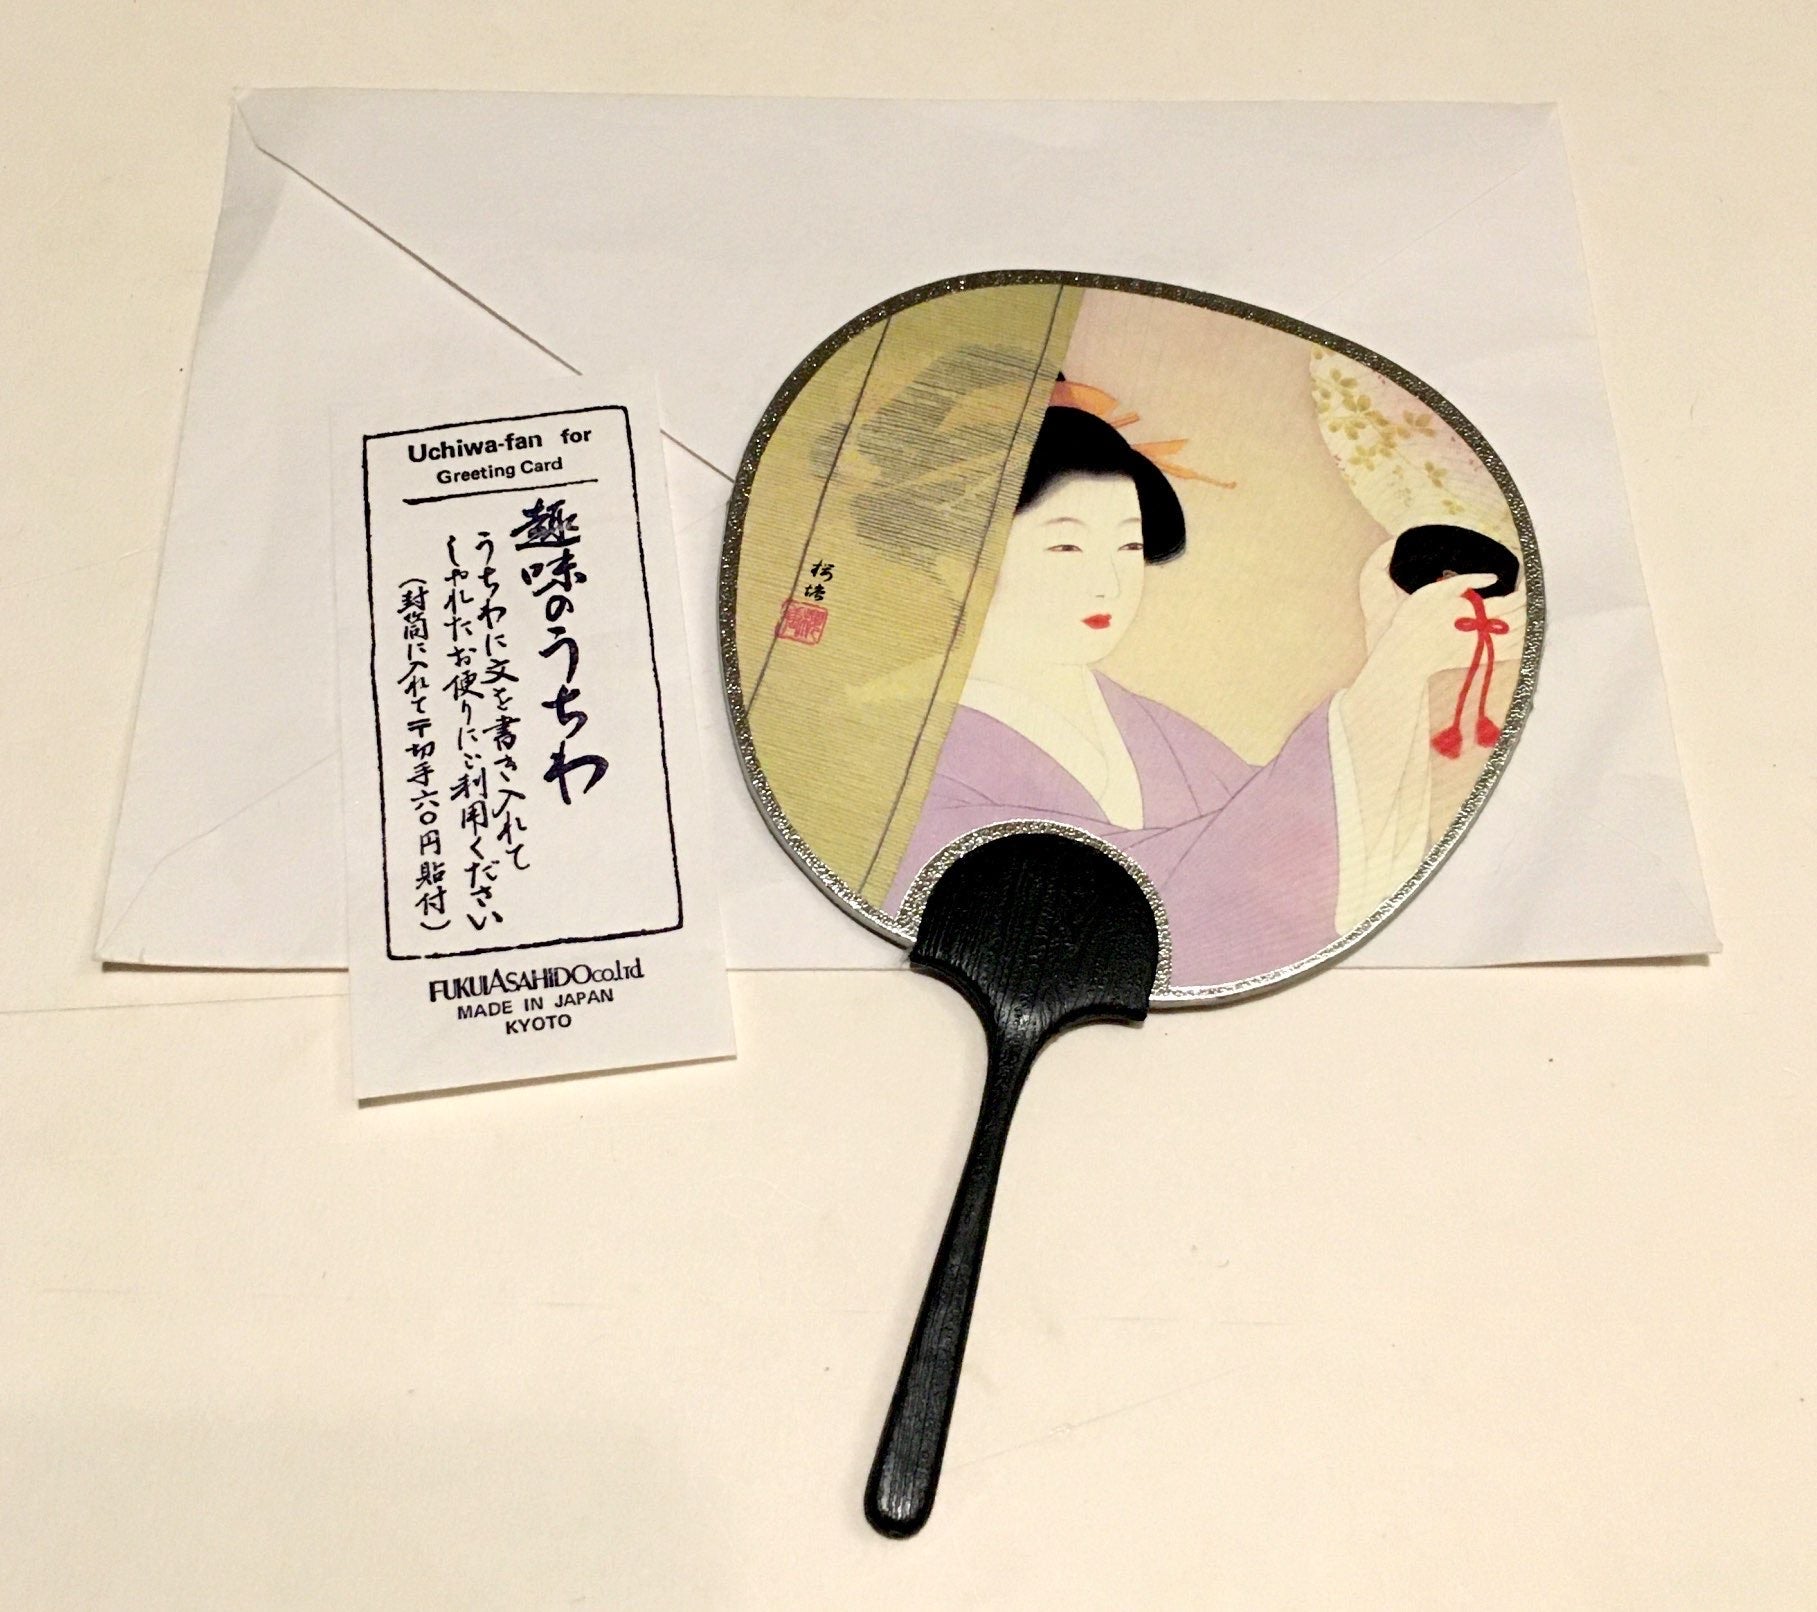 Uchiwa (fan) greeting card